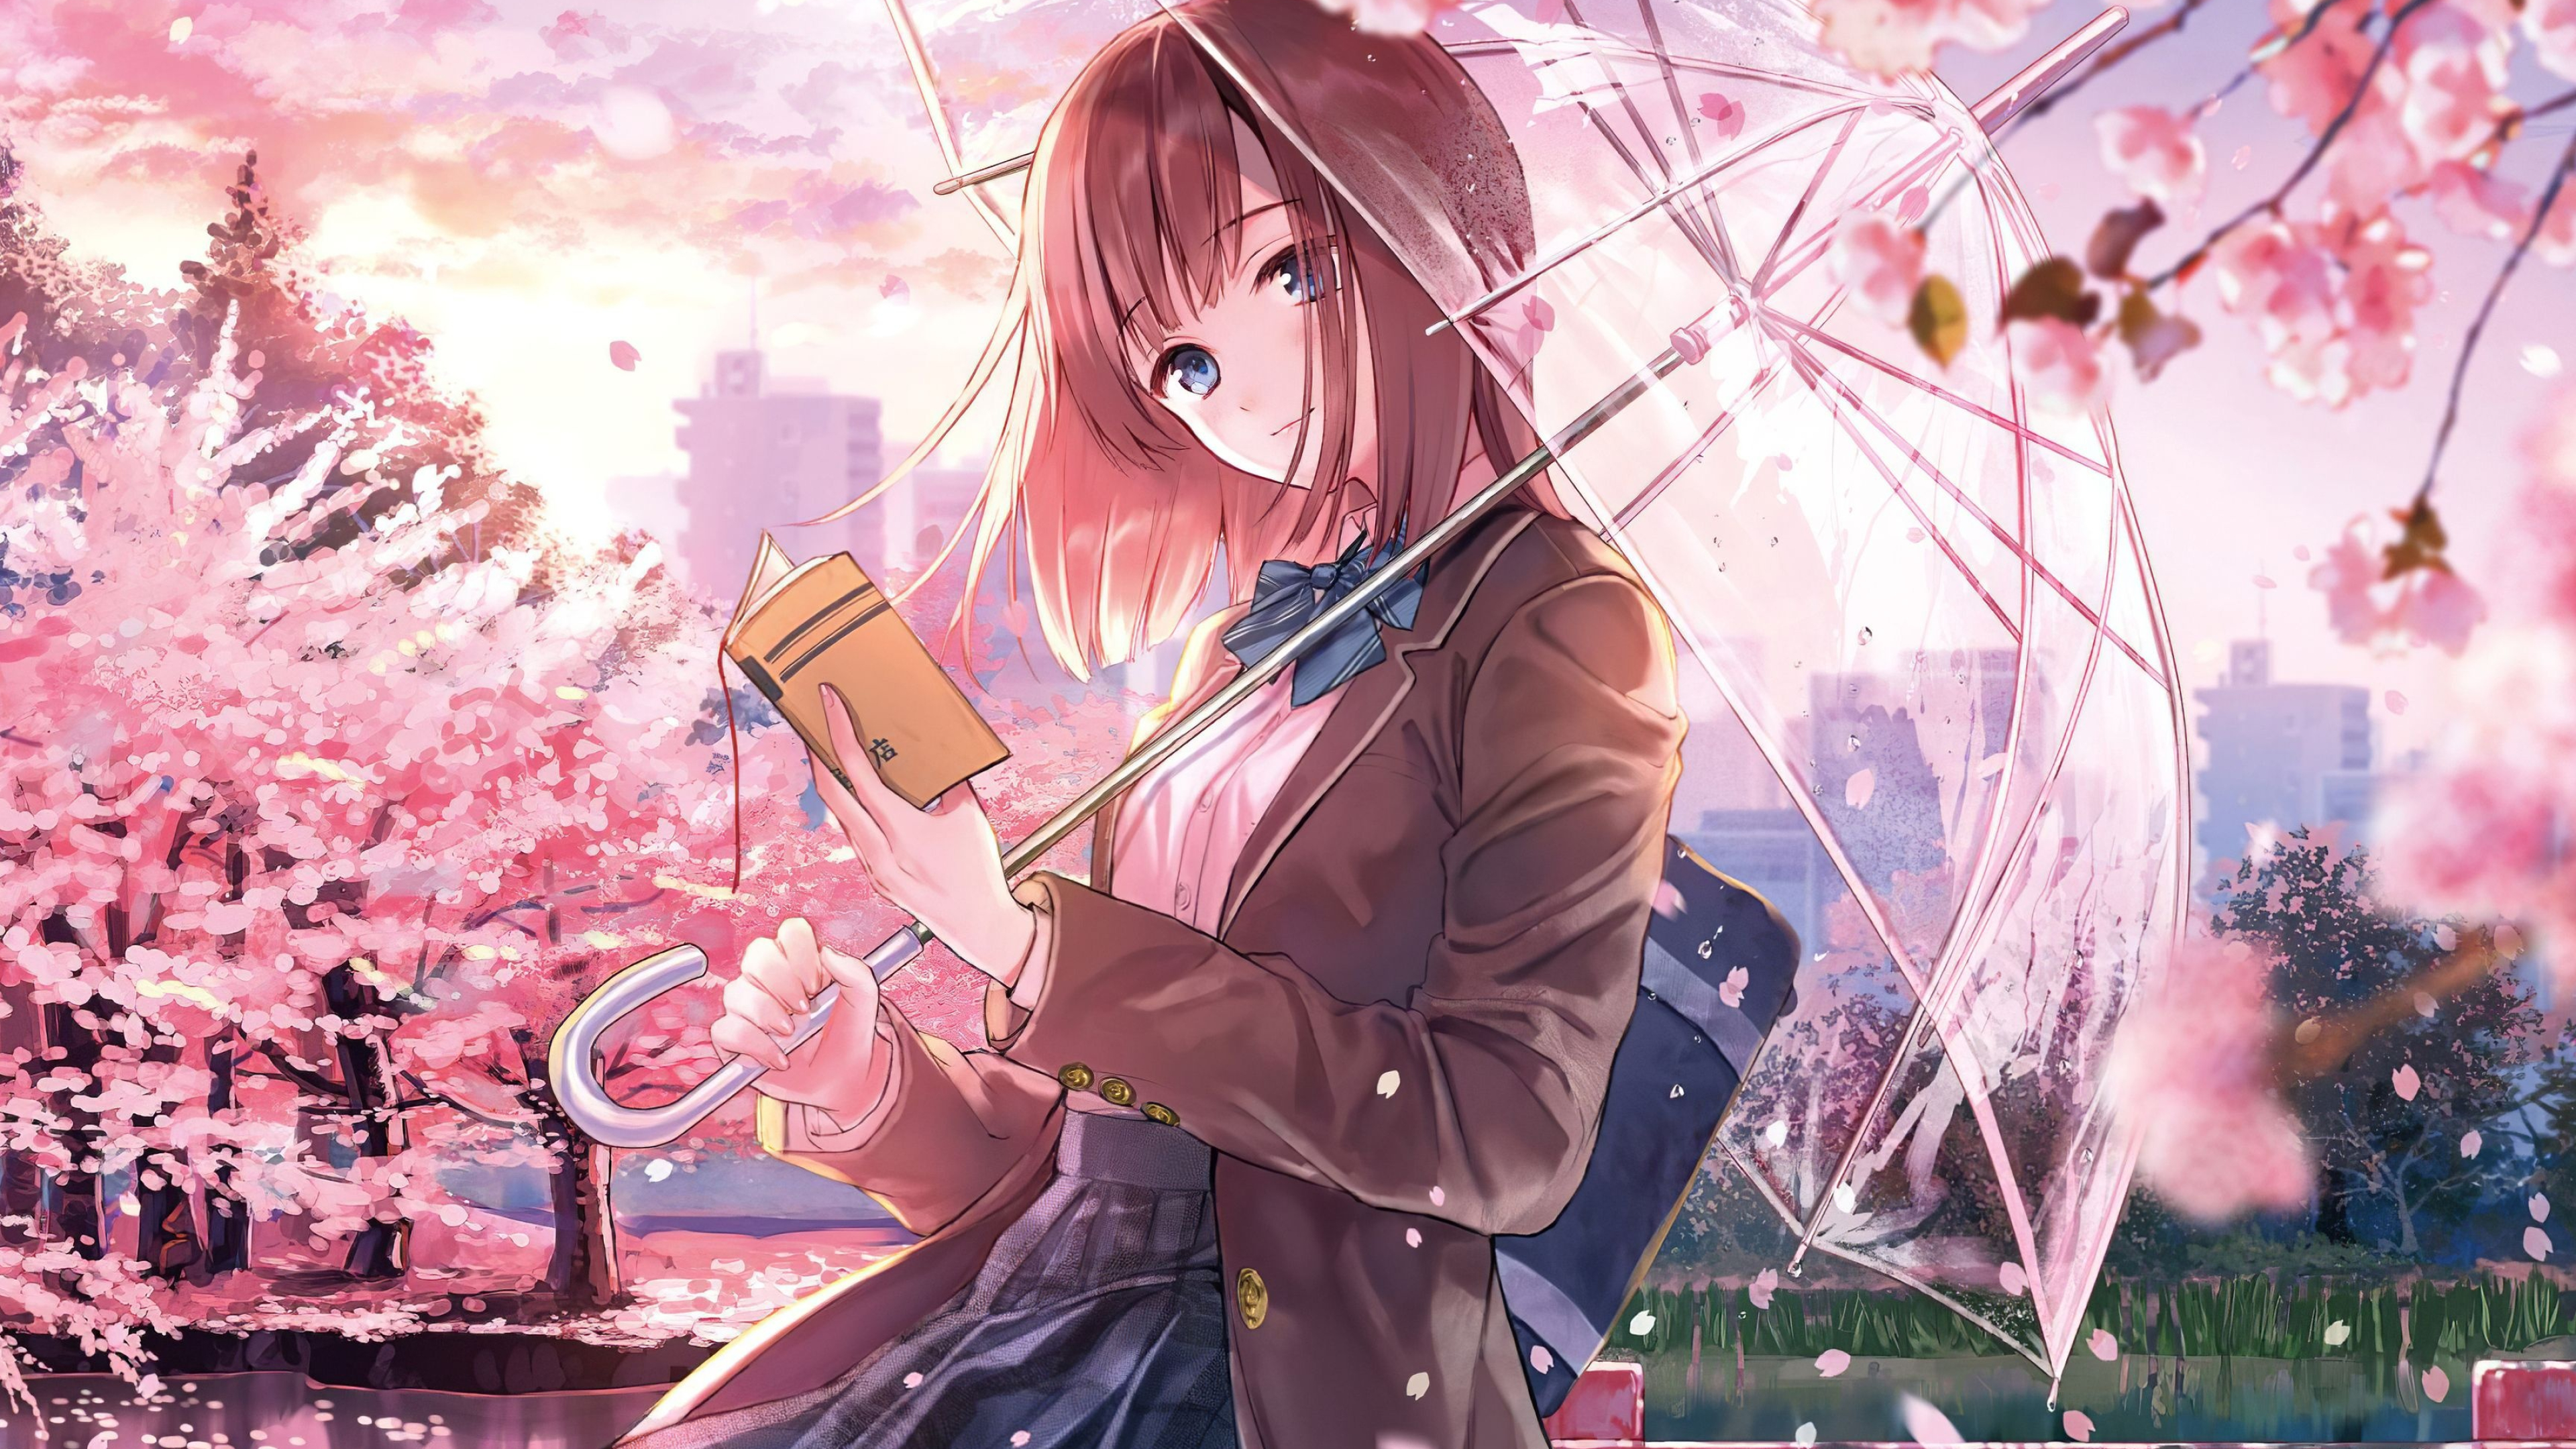 Anime Girl: Cherry blossoms, Umbrella, Art. 3840x2160 4K Background.